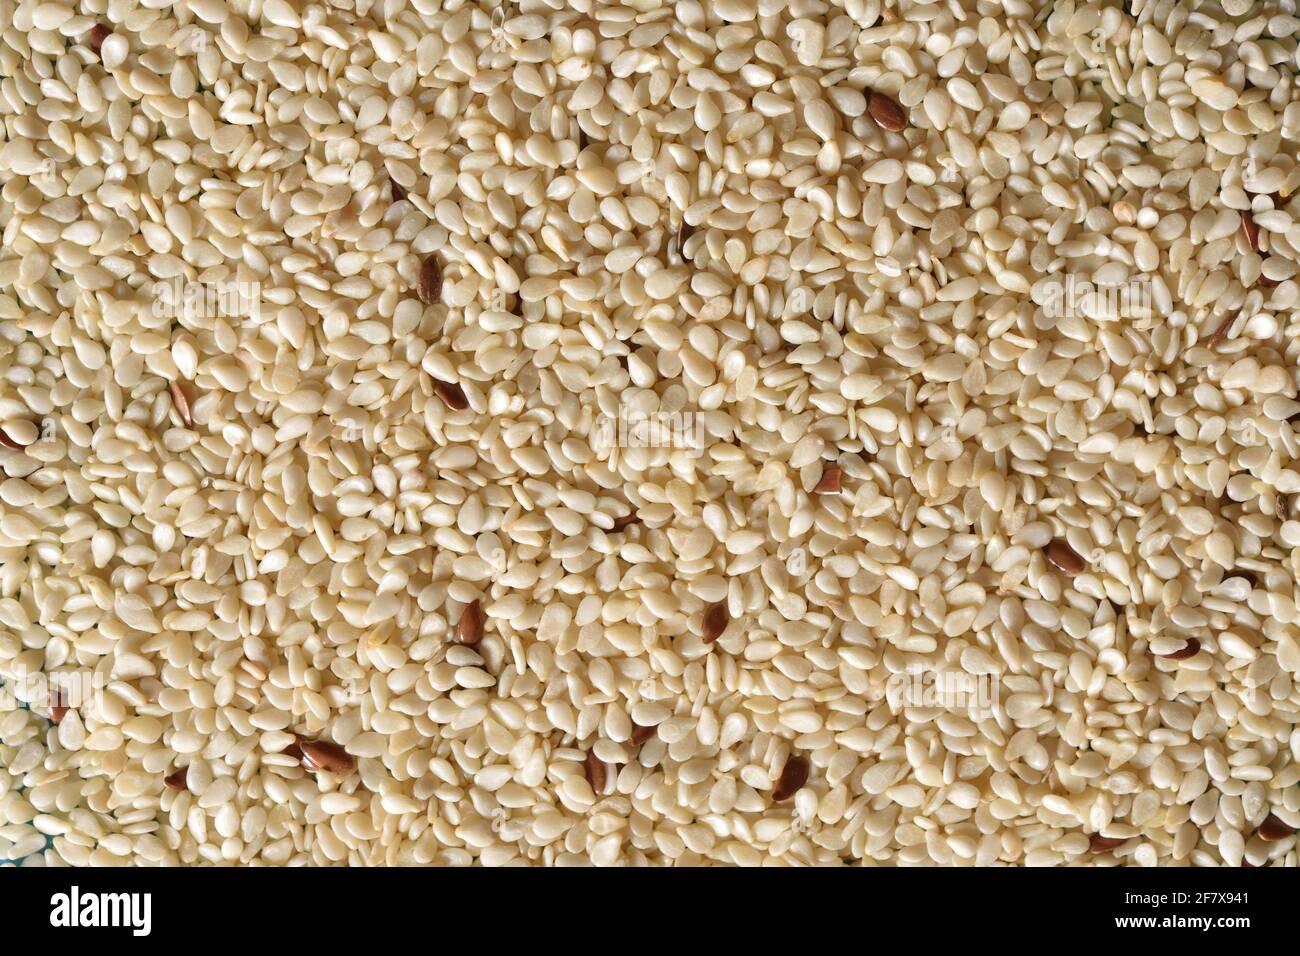 Spicy grains of sesame seasoning, full frame cover Stock Photo